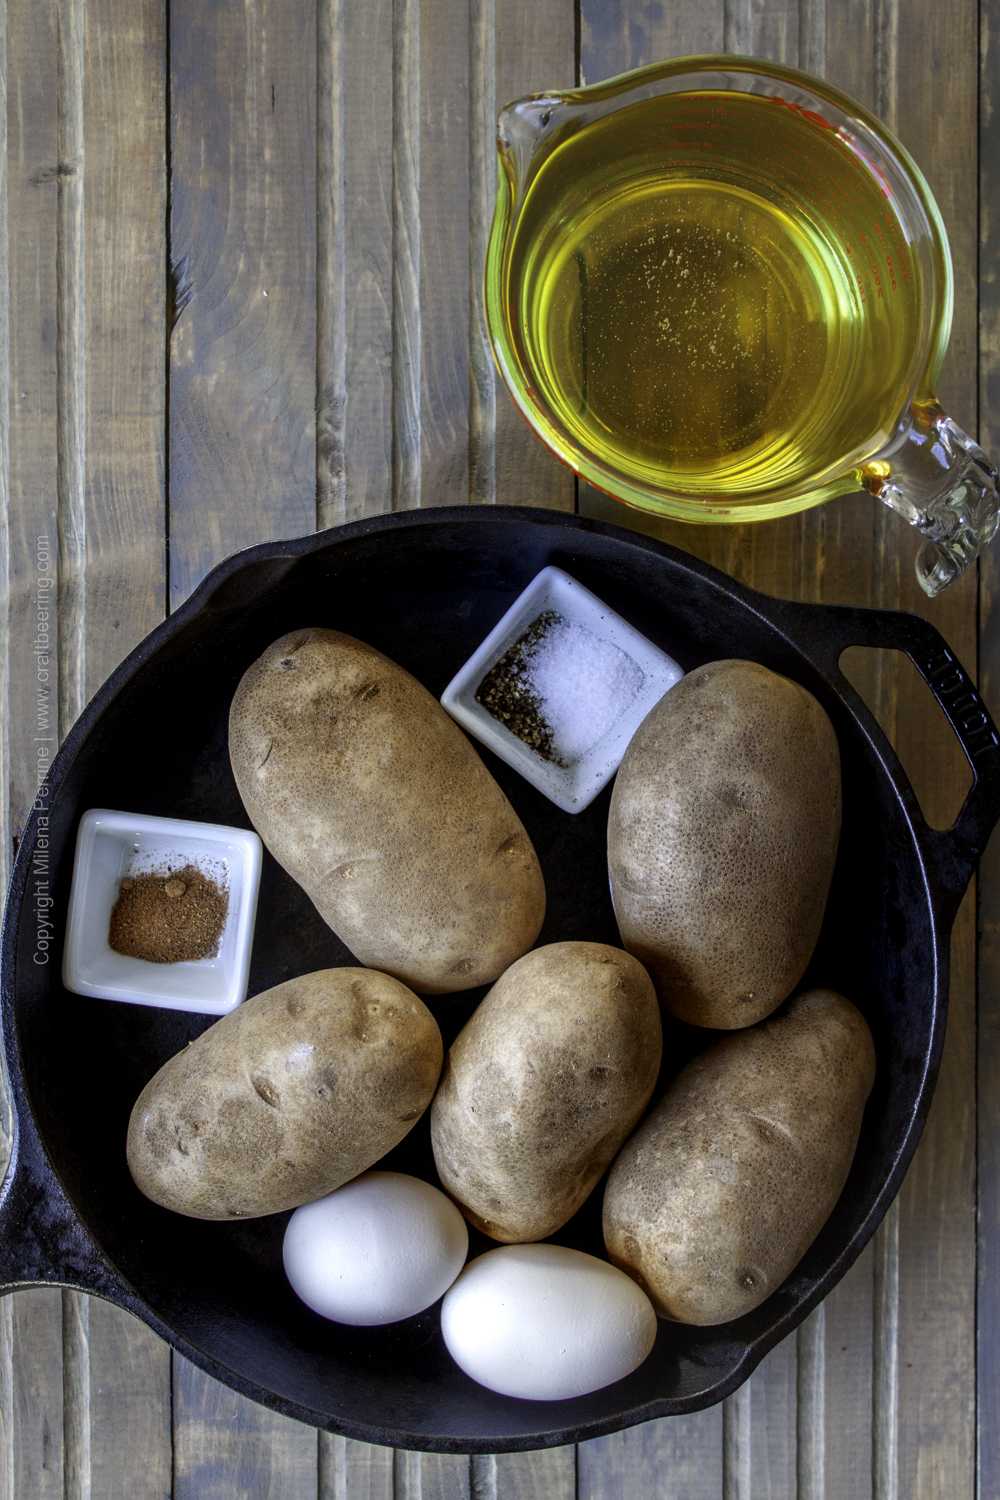 Ingredients - Russet potatoes, nutmeg, eggs, oil for frying, salt and perpper